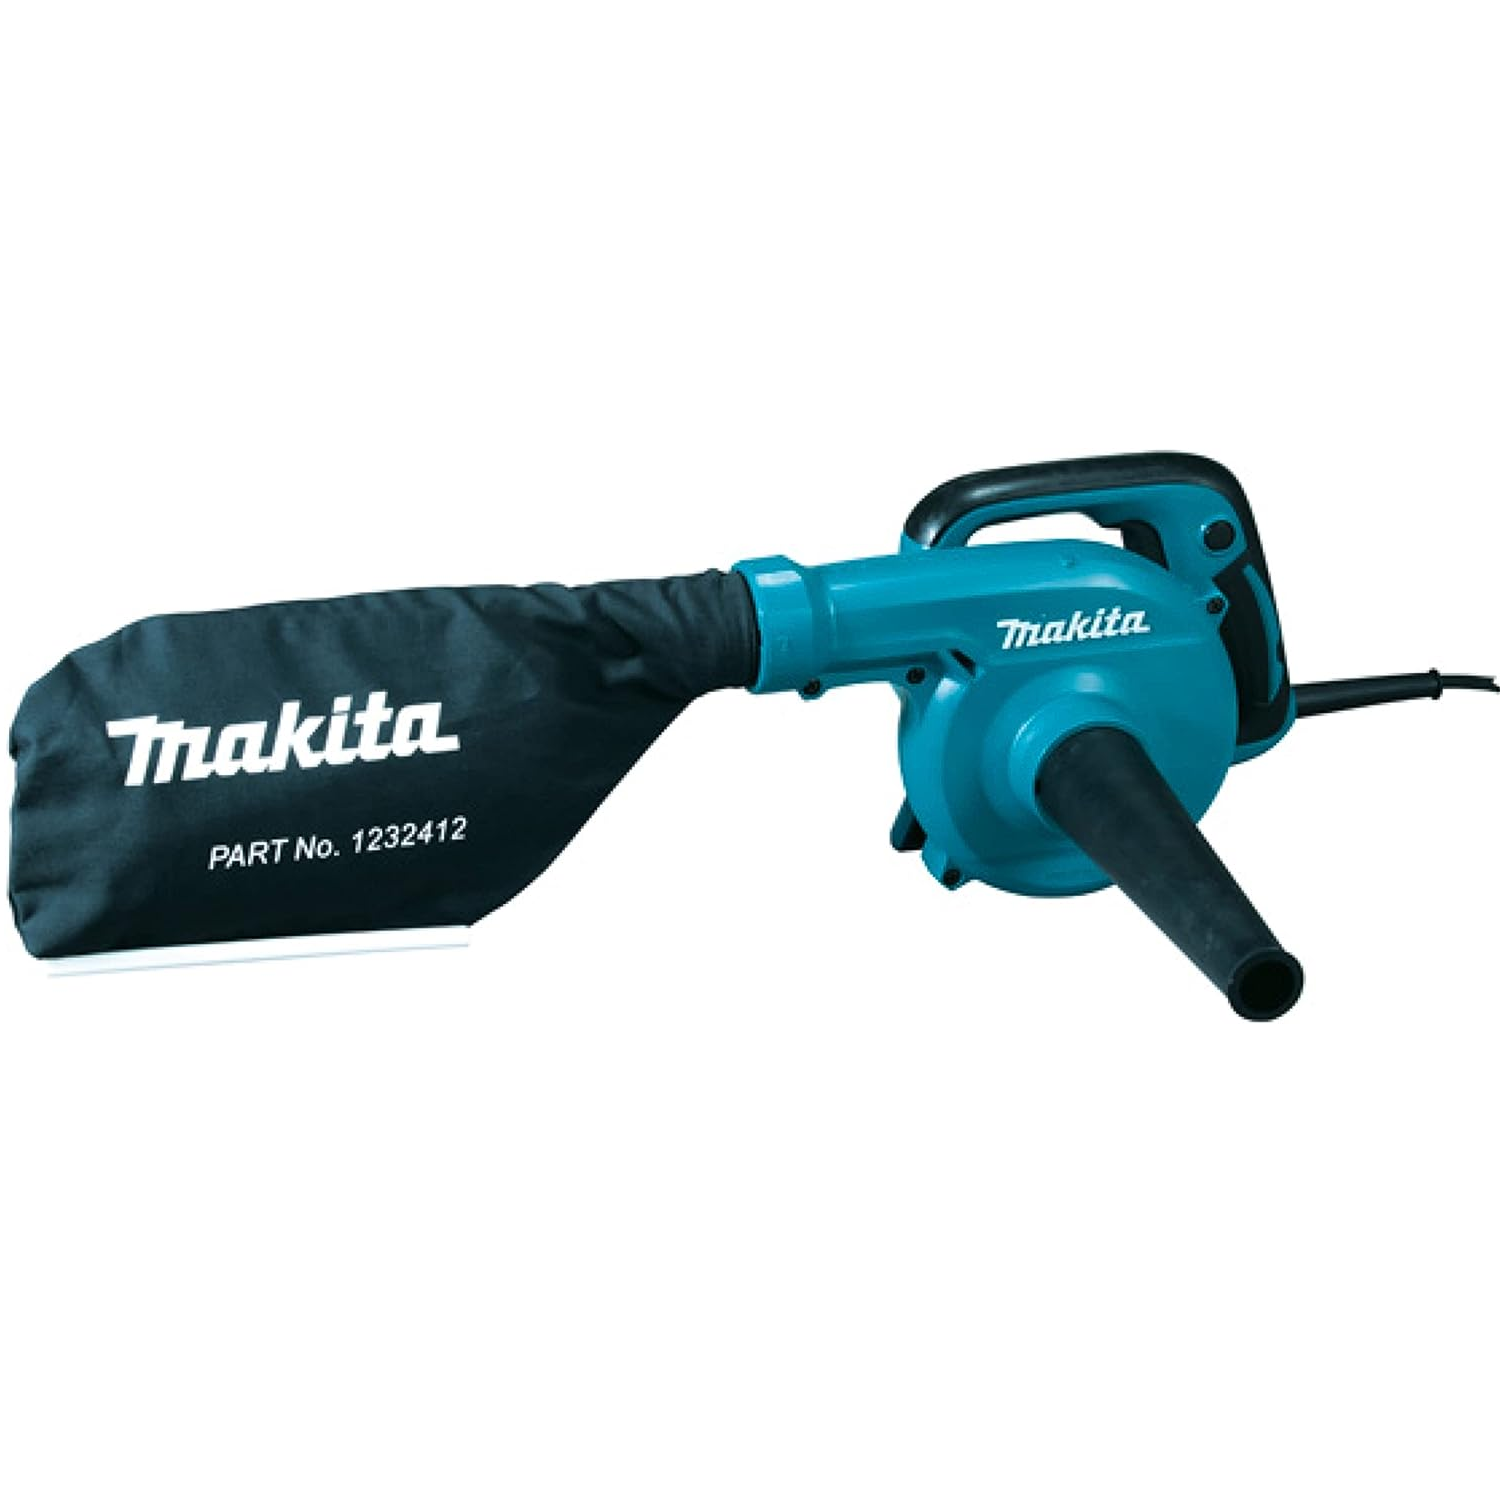 Makita ub1103/2 240v blower/vacuum with dust bag